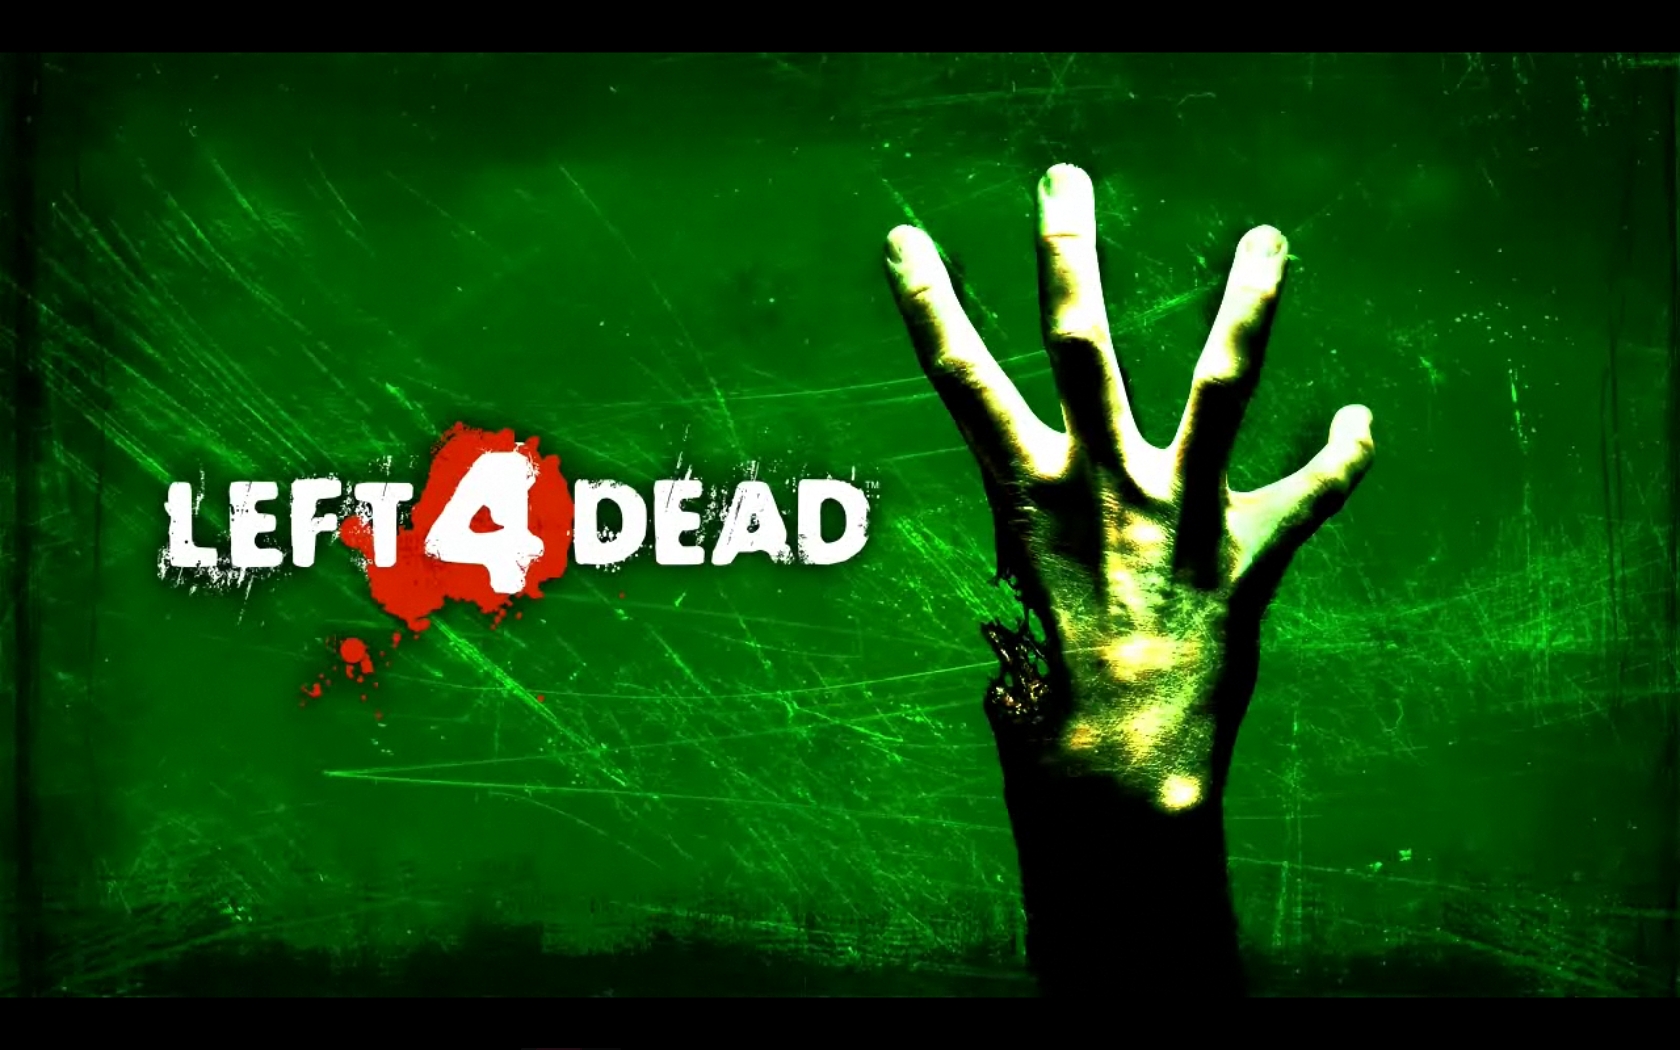 Evolve/Left 4 Dead Developer Turtle Rock Studios Working on New AAA Game - The Games Cabin